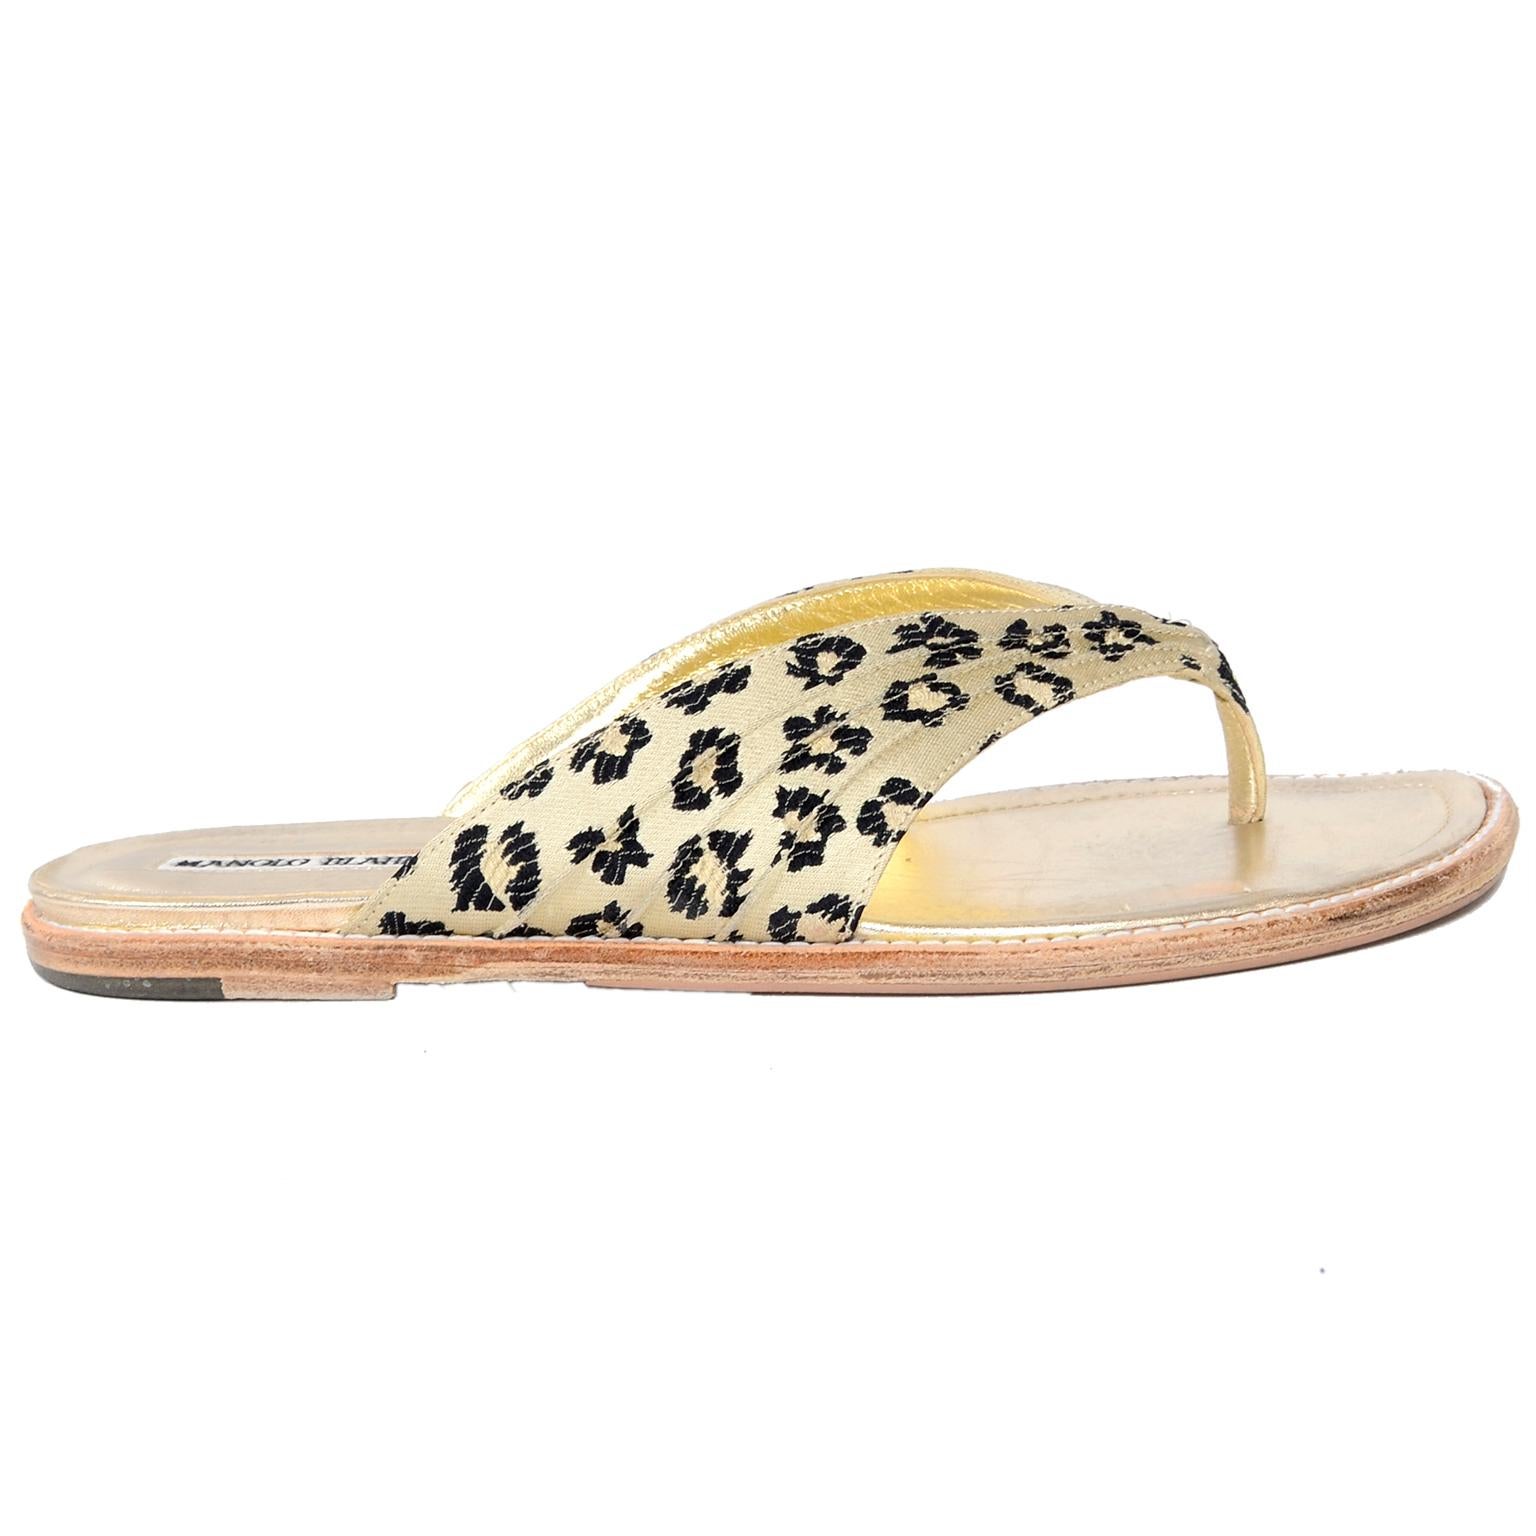 Manolo Blahnik Cheetah Print Gold Thong Sandals Size 38.5 6